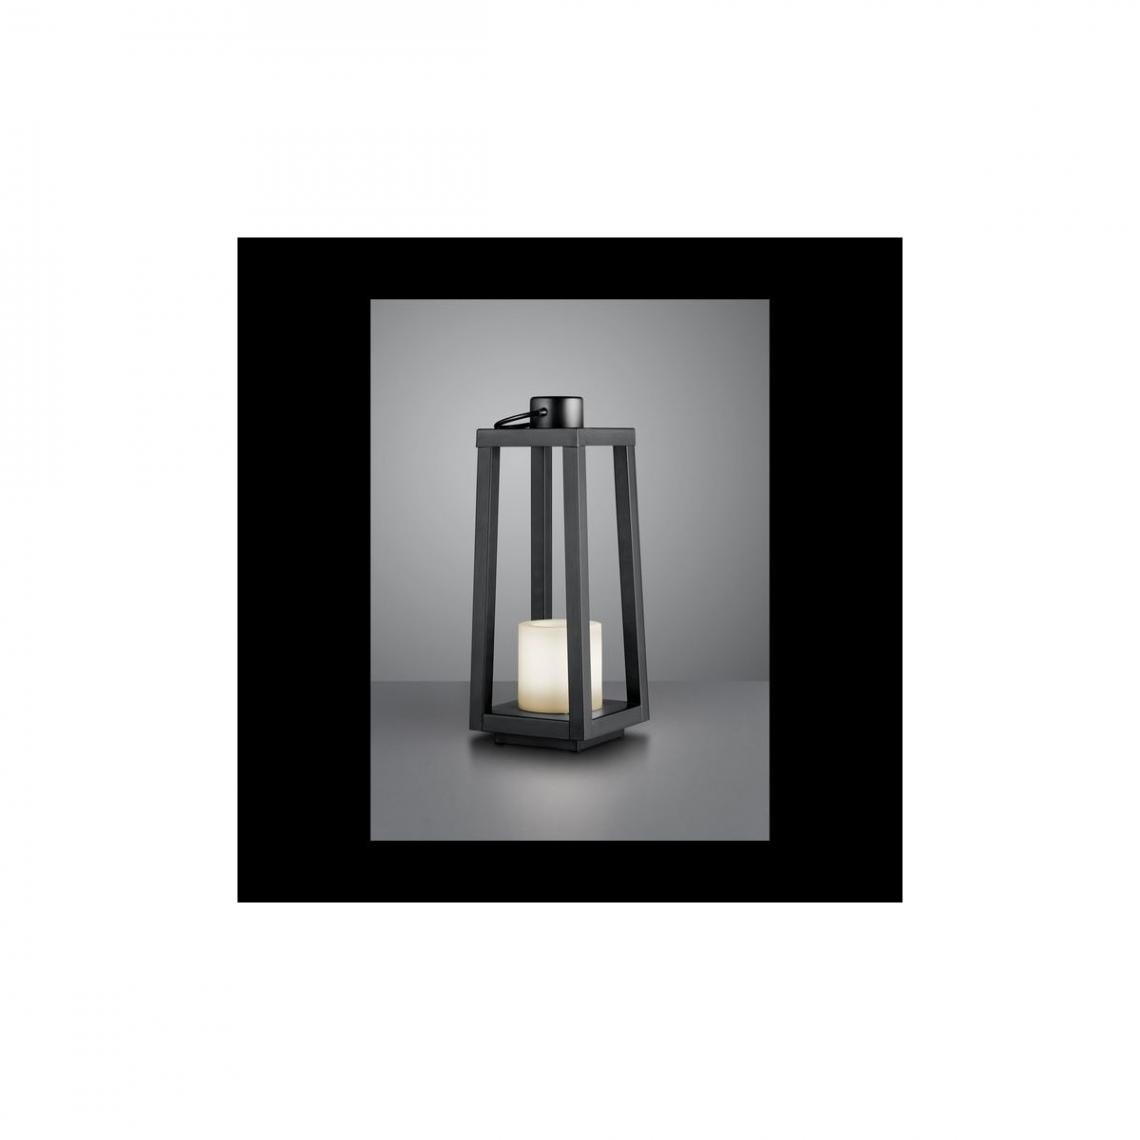 REALITY - Lampe de table Loja Noir Mat 1x1W SMD LED - Lampes portatives sans fil